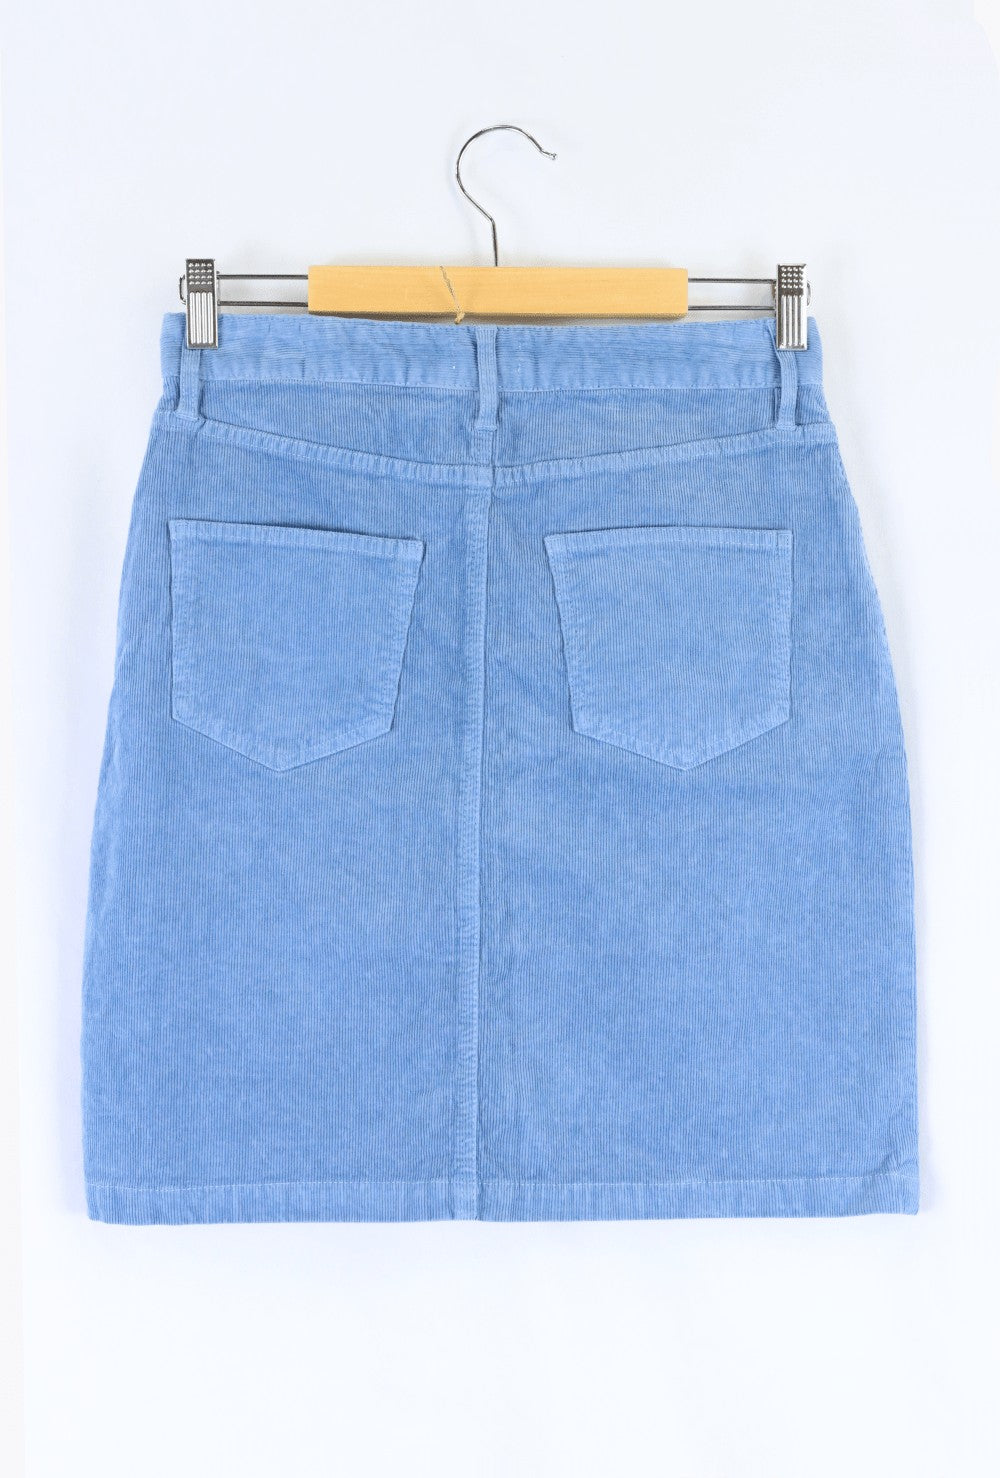 Gorman Blue Corduroy Skirt 10